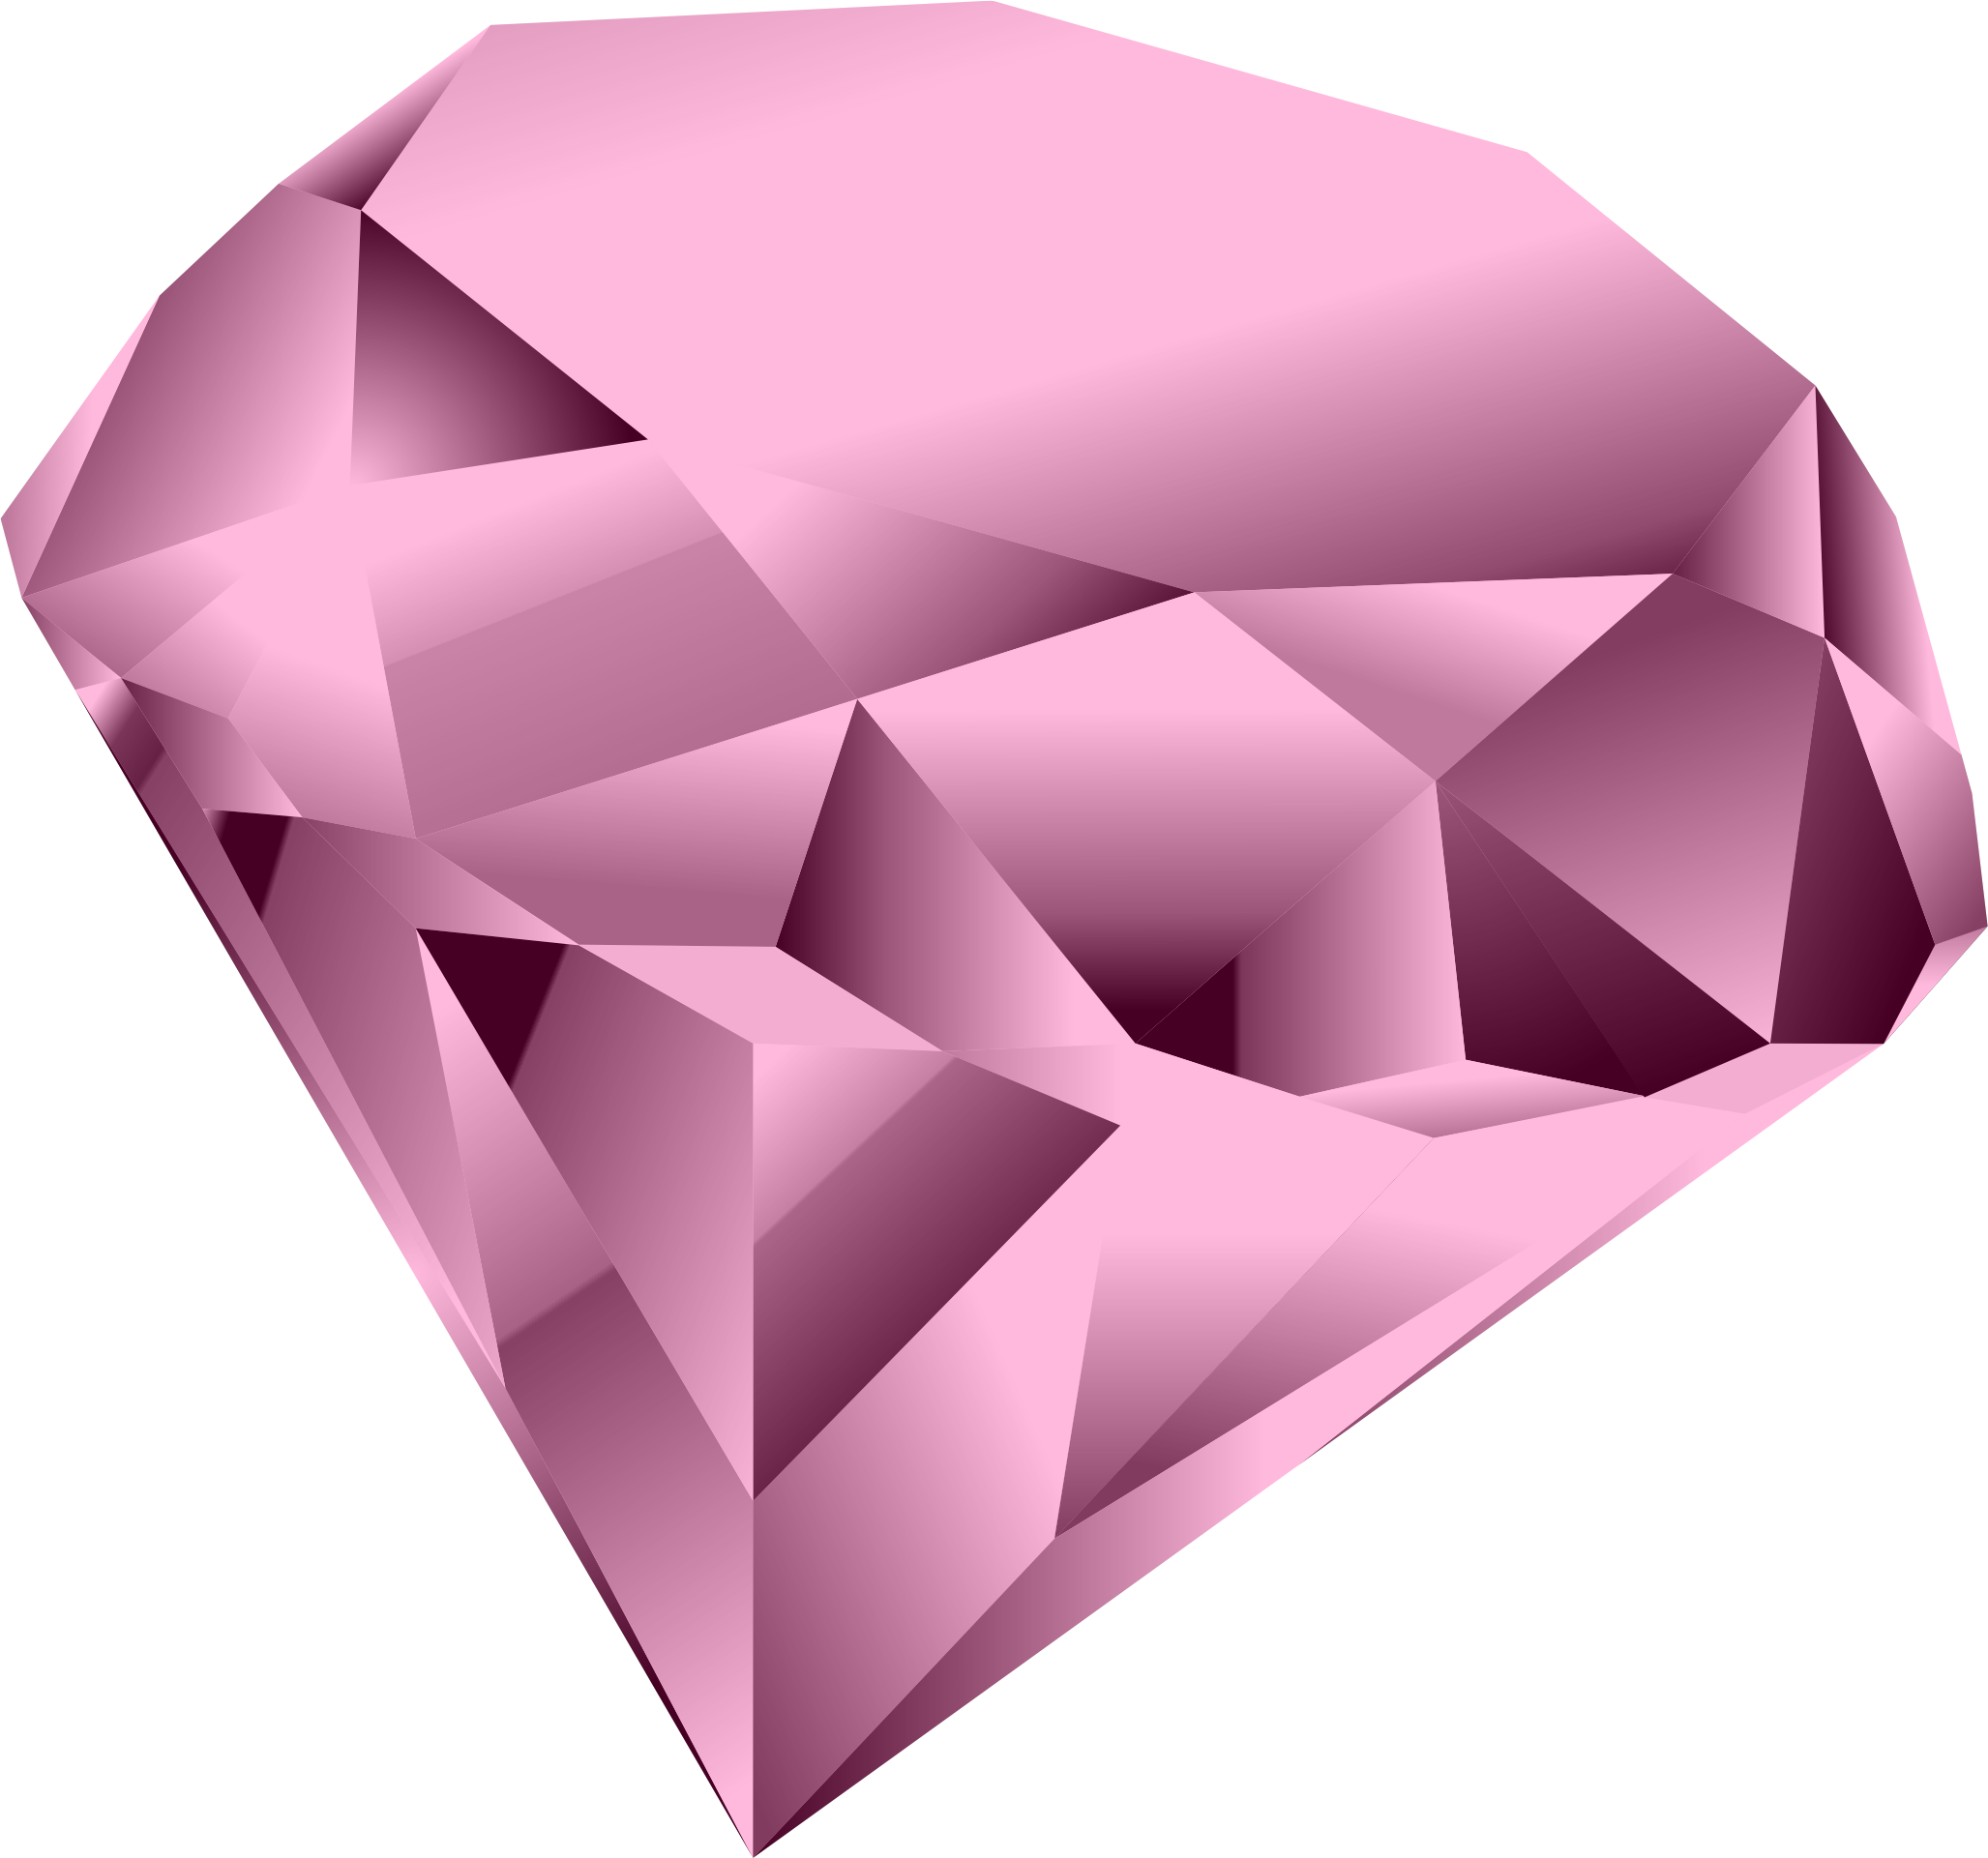 Diamond clipart purple. Big image png